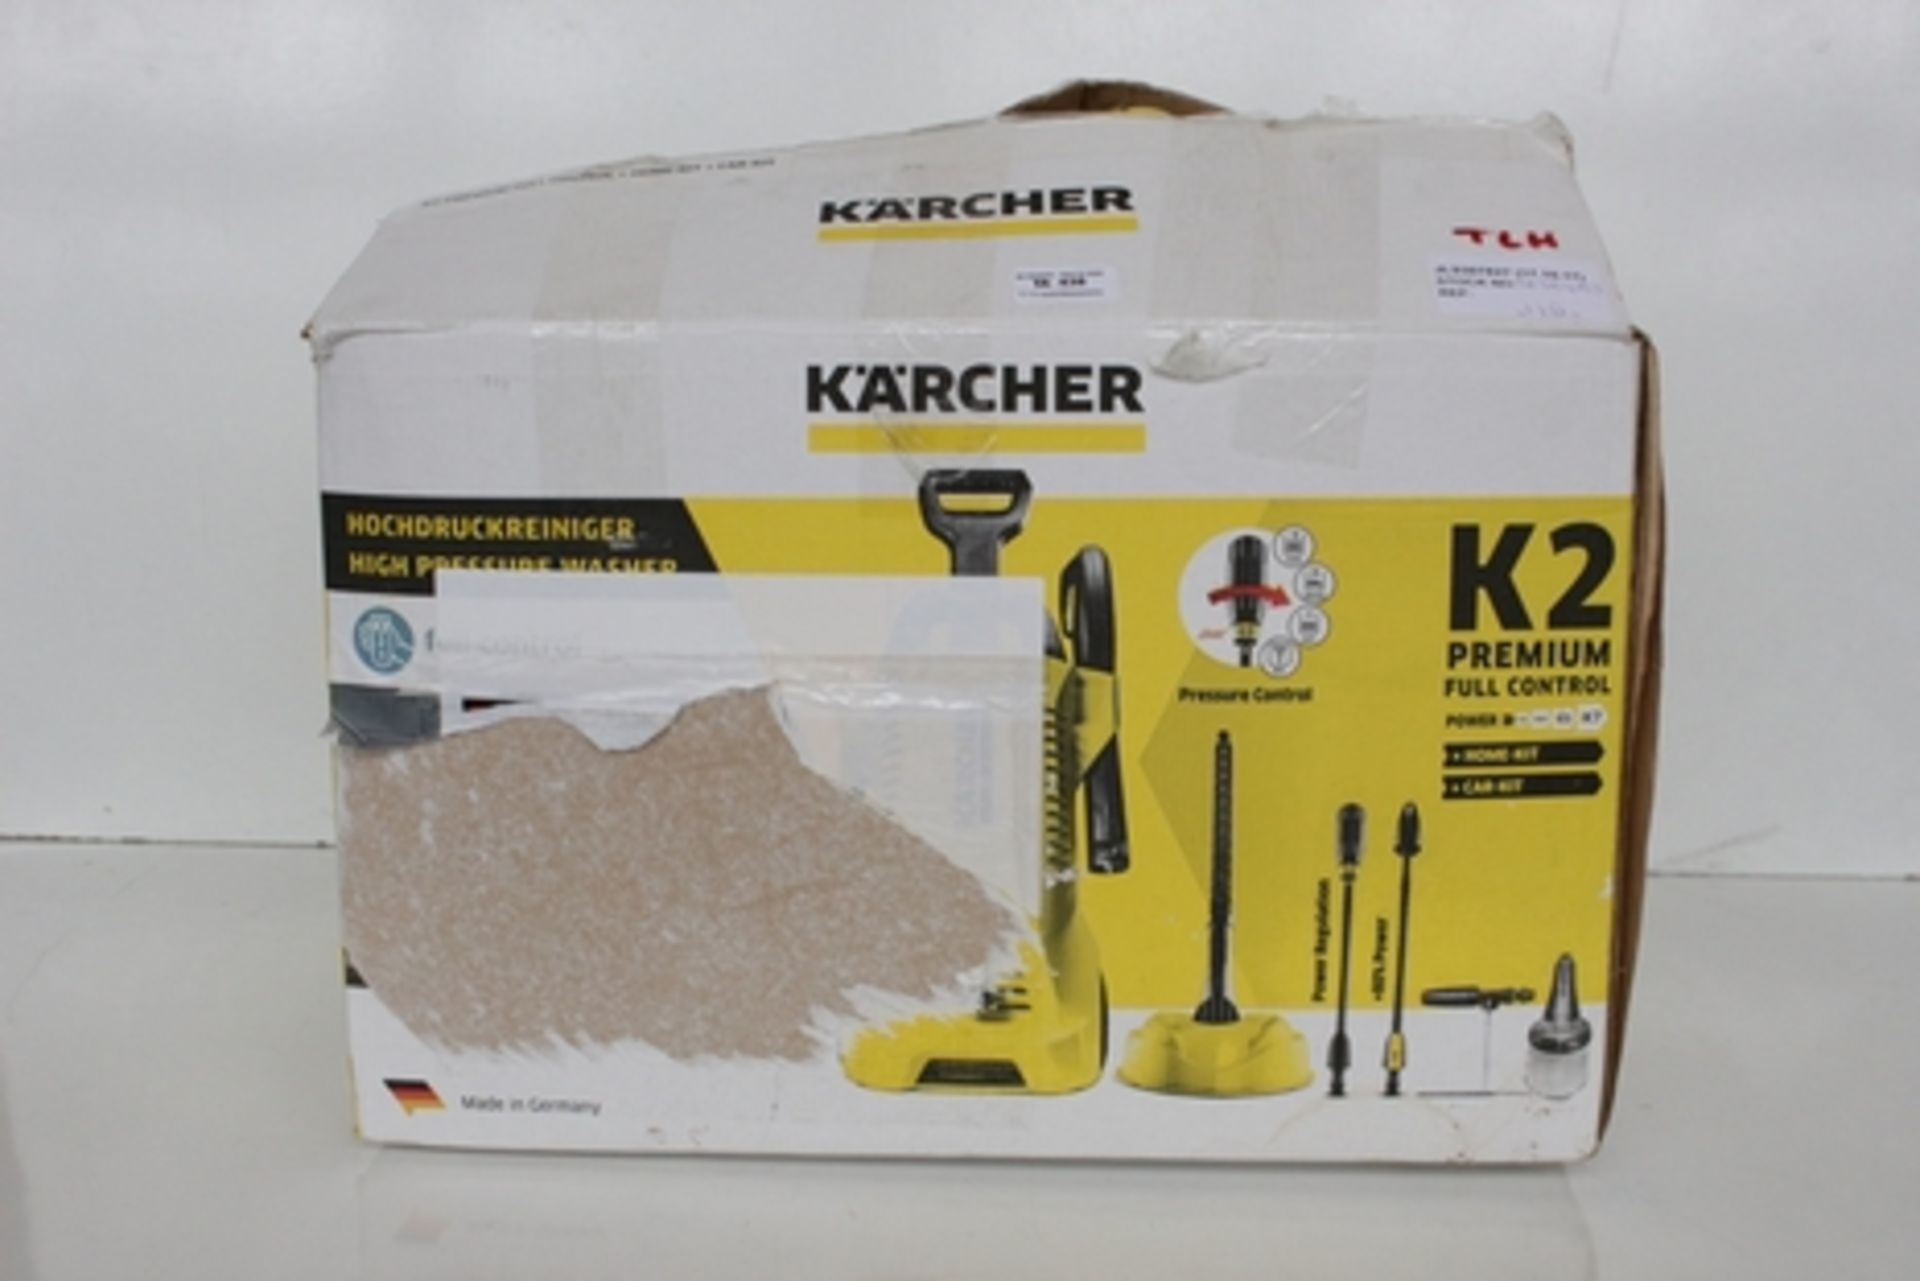 1X BOXED KARCHER K2 PREMIUM FULL CONTROL HIGH PRESSURE WASHER RRP £120 (JL-9307827) (17.10.17) (